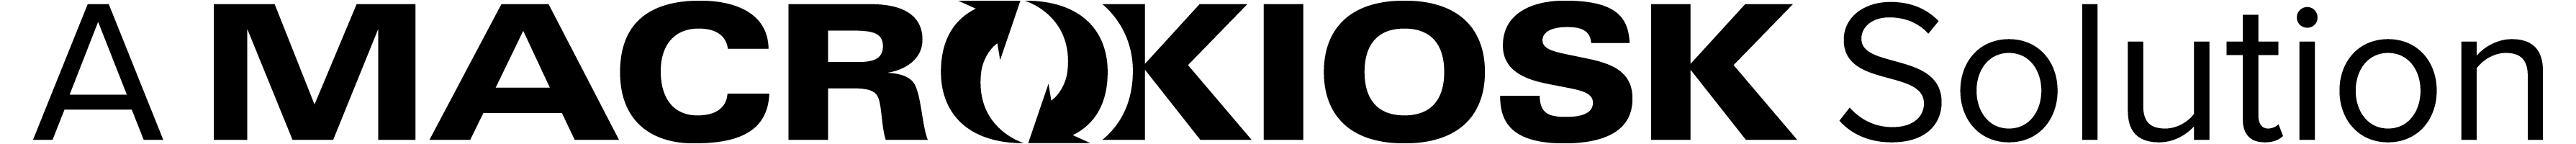 A Macrokiosk Product Logo